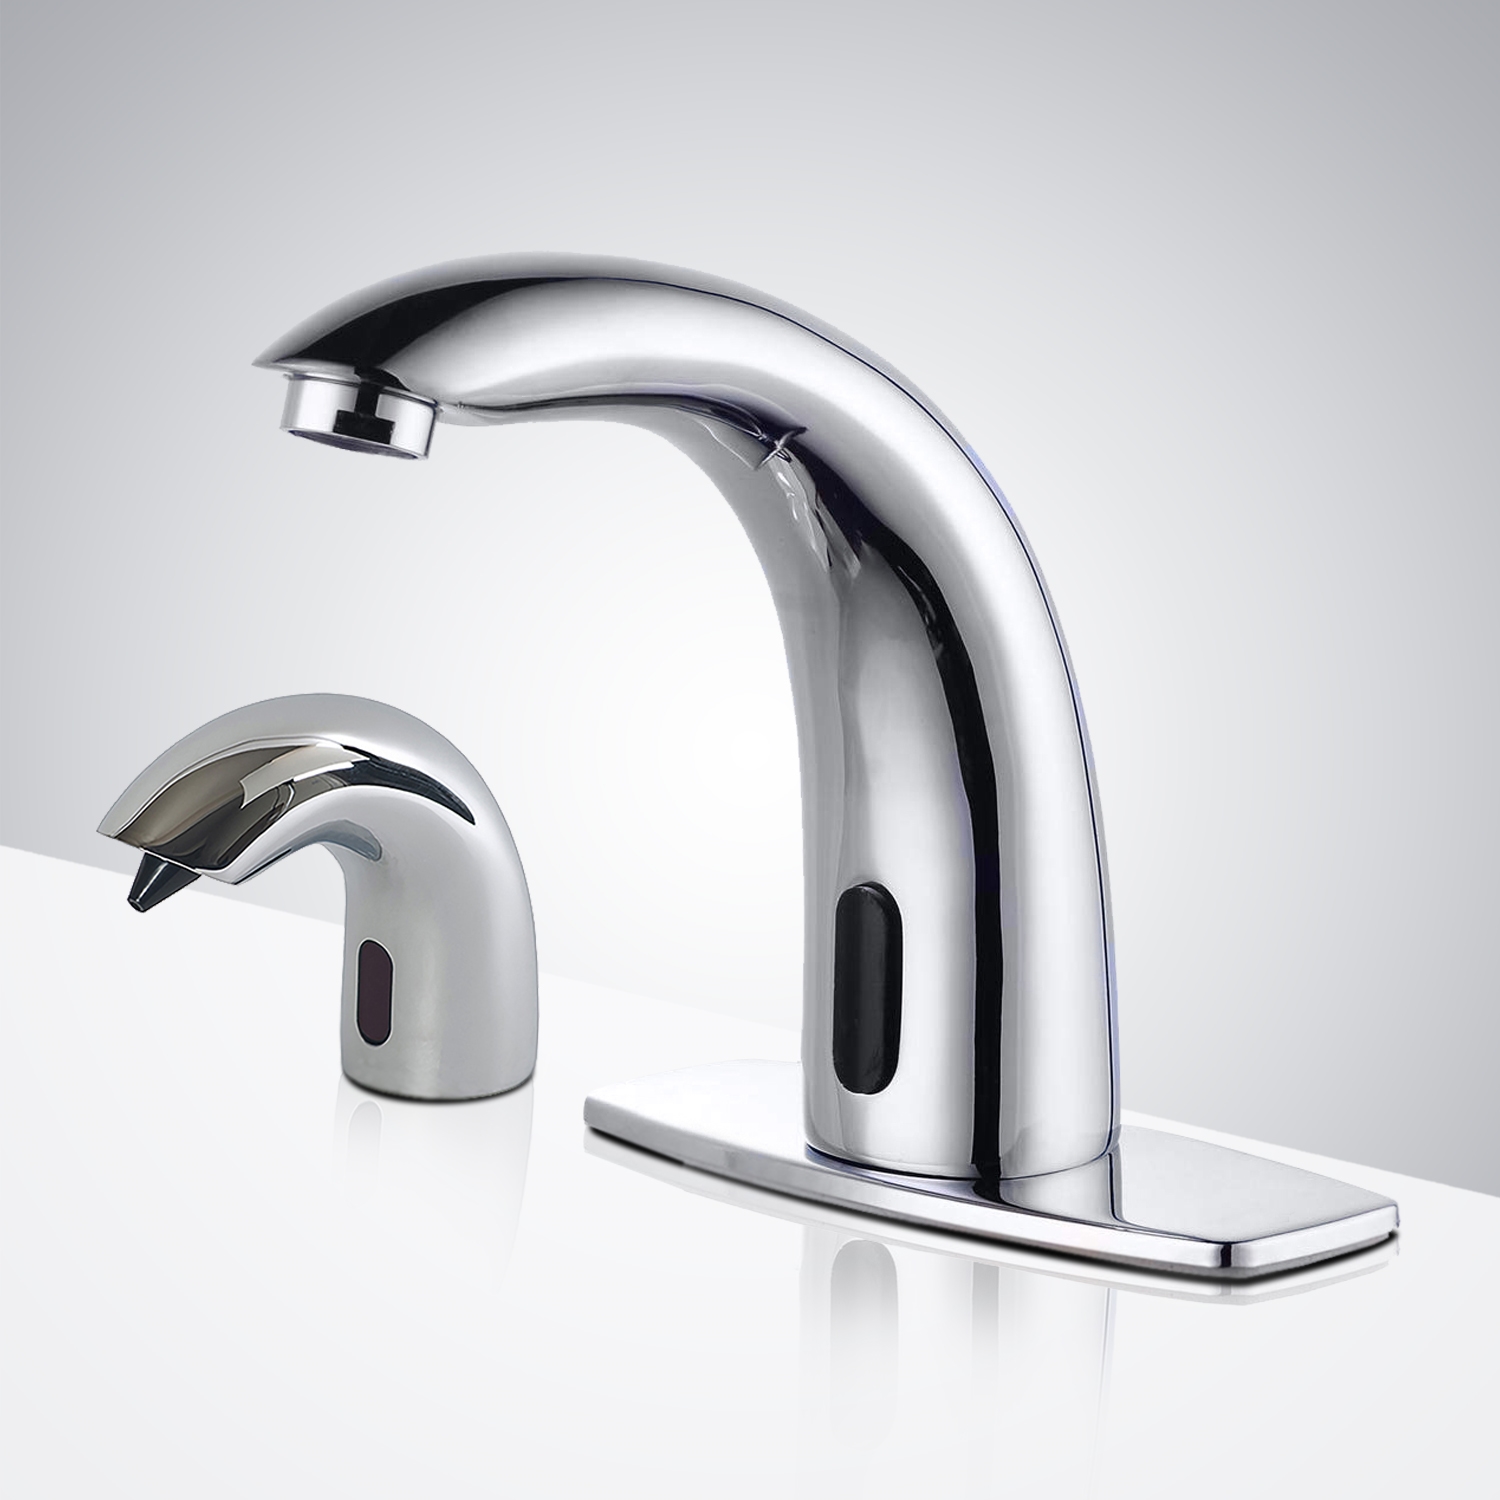 Fontana Deauville Motion Sensor Faucet & Automatic Soap Dispenser for Restrooms in Chrome